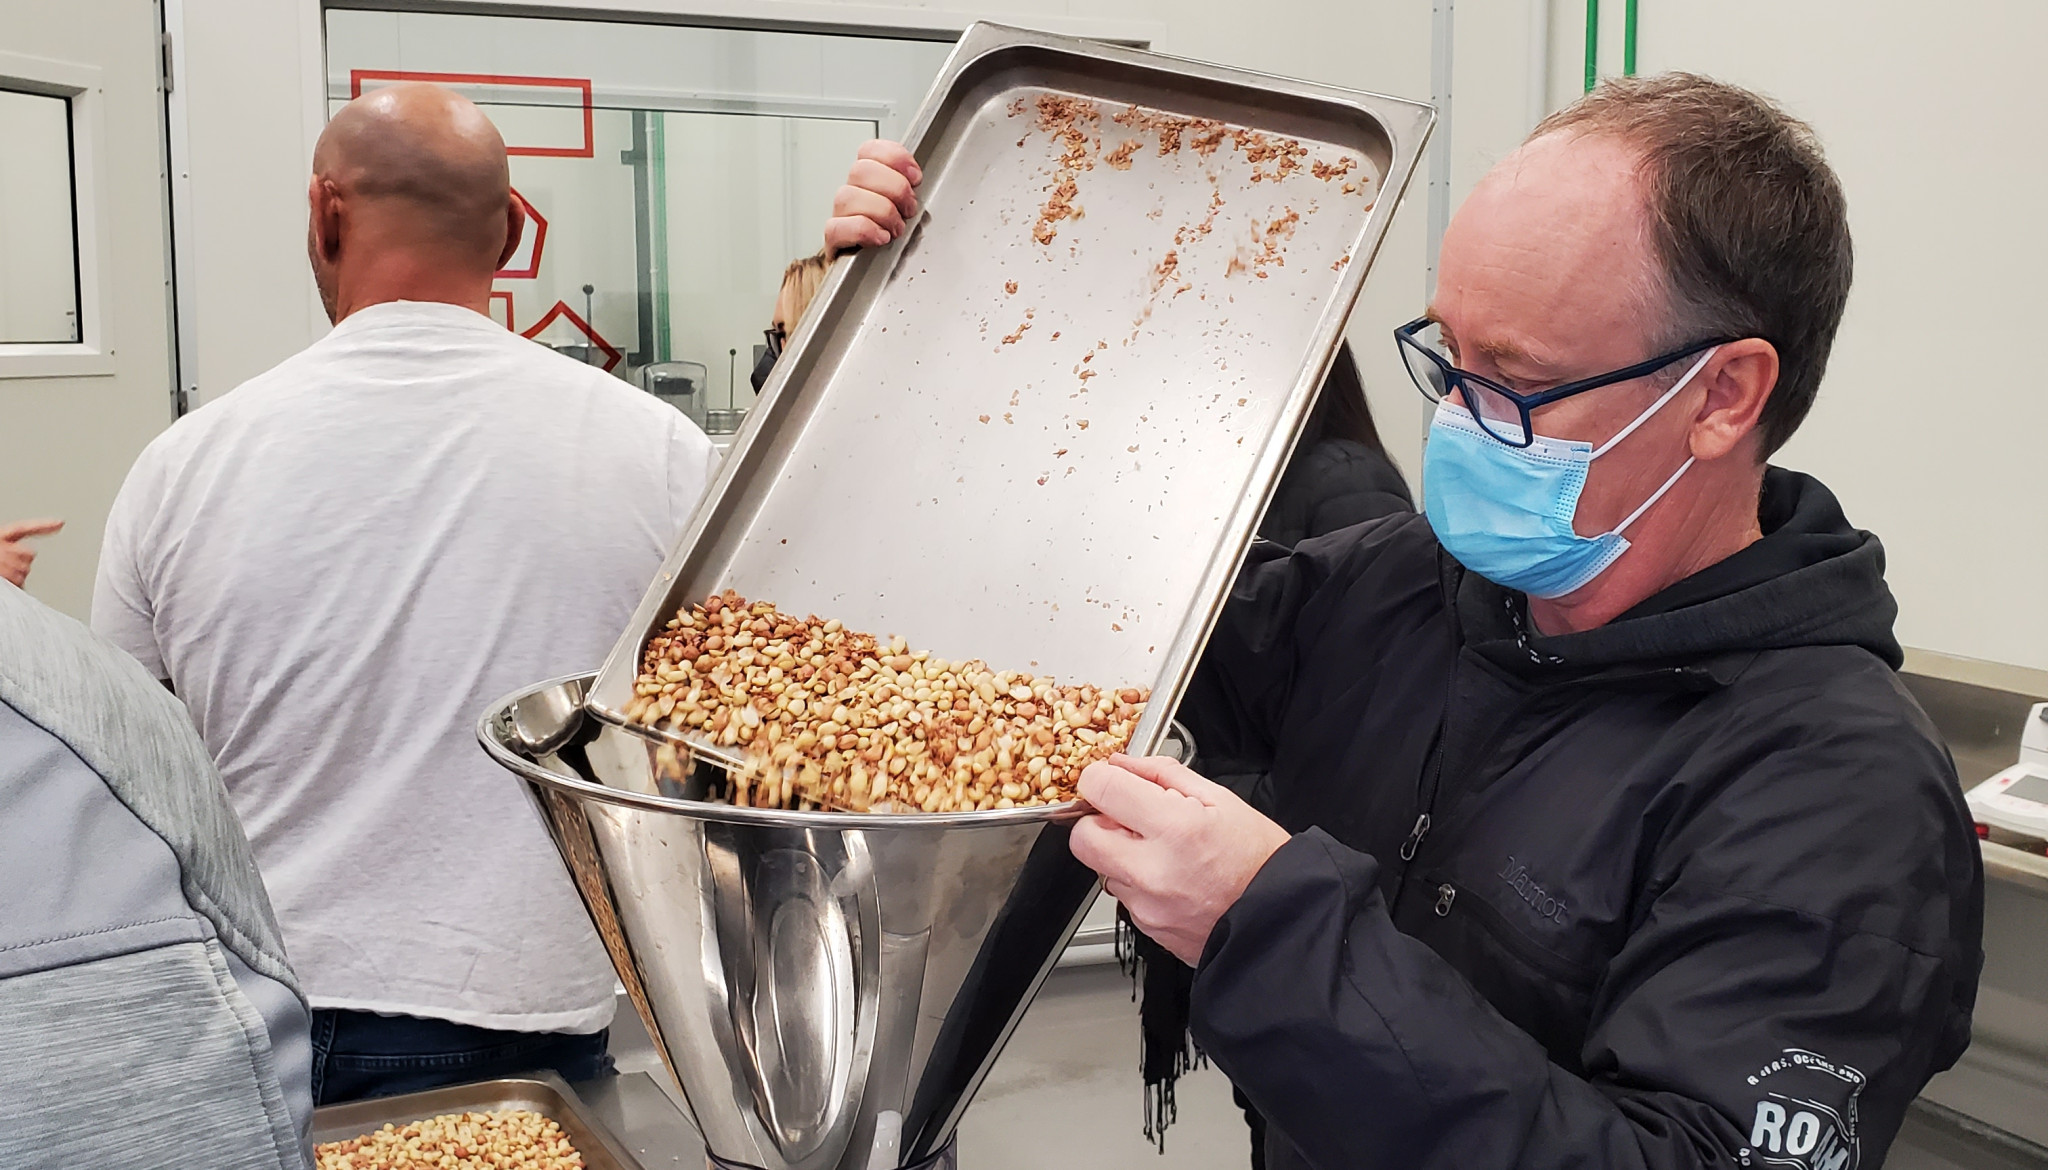 Peanuts being processed